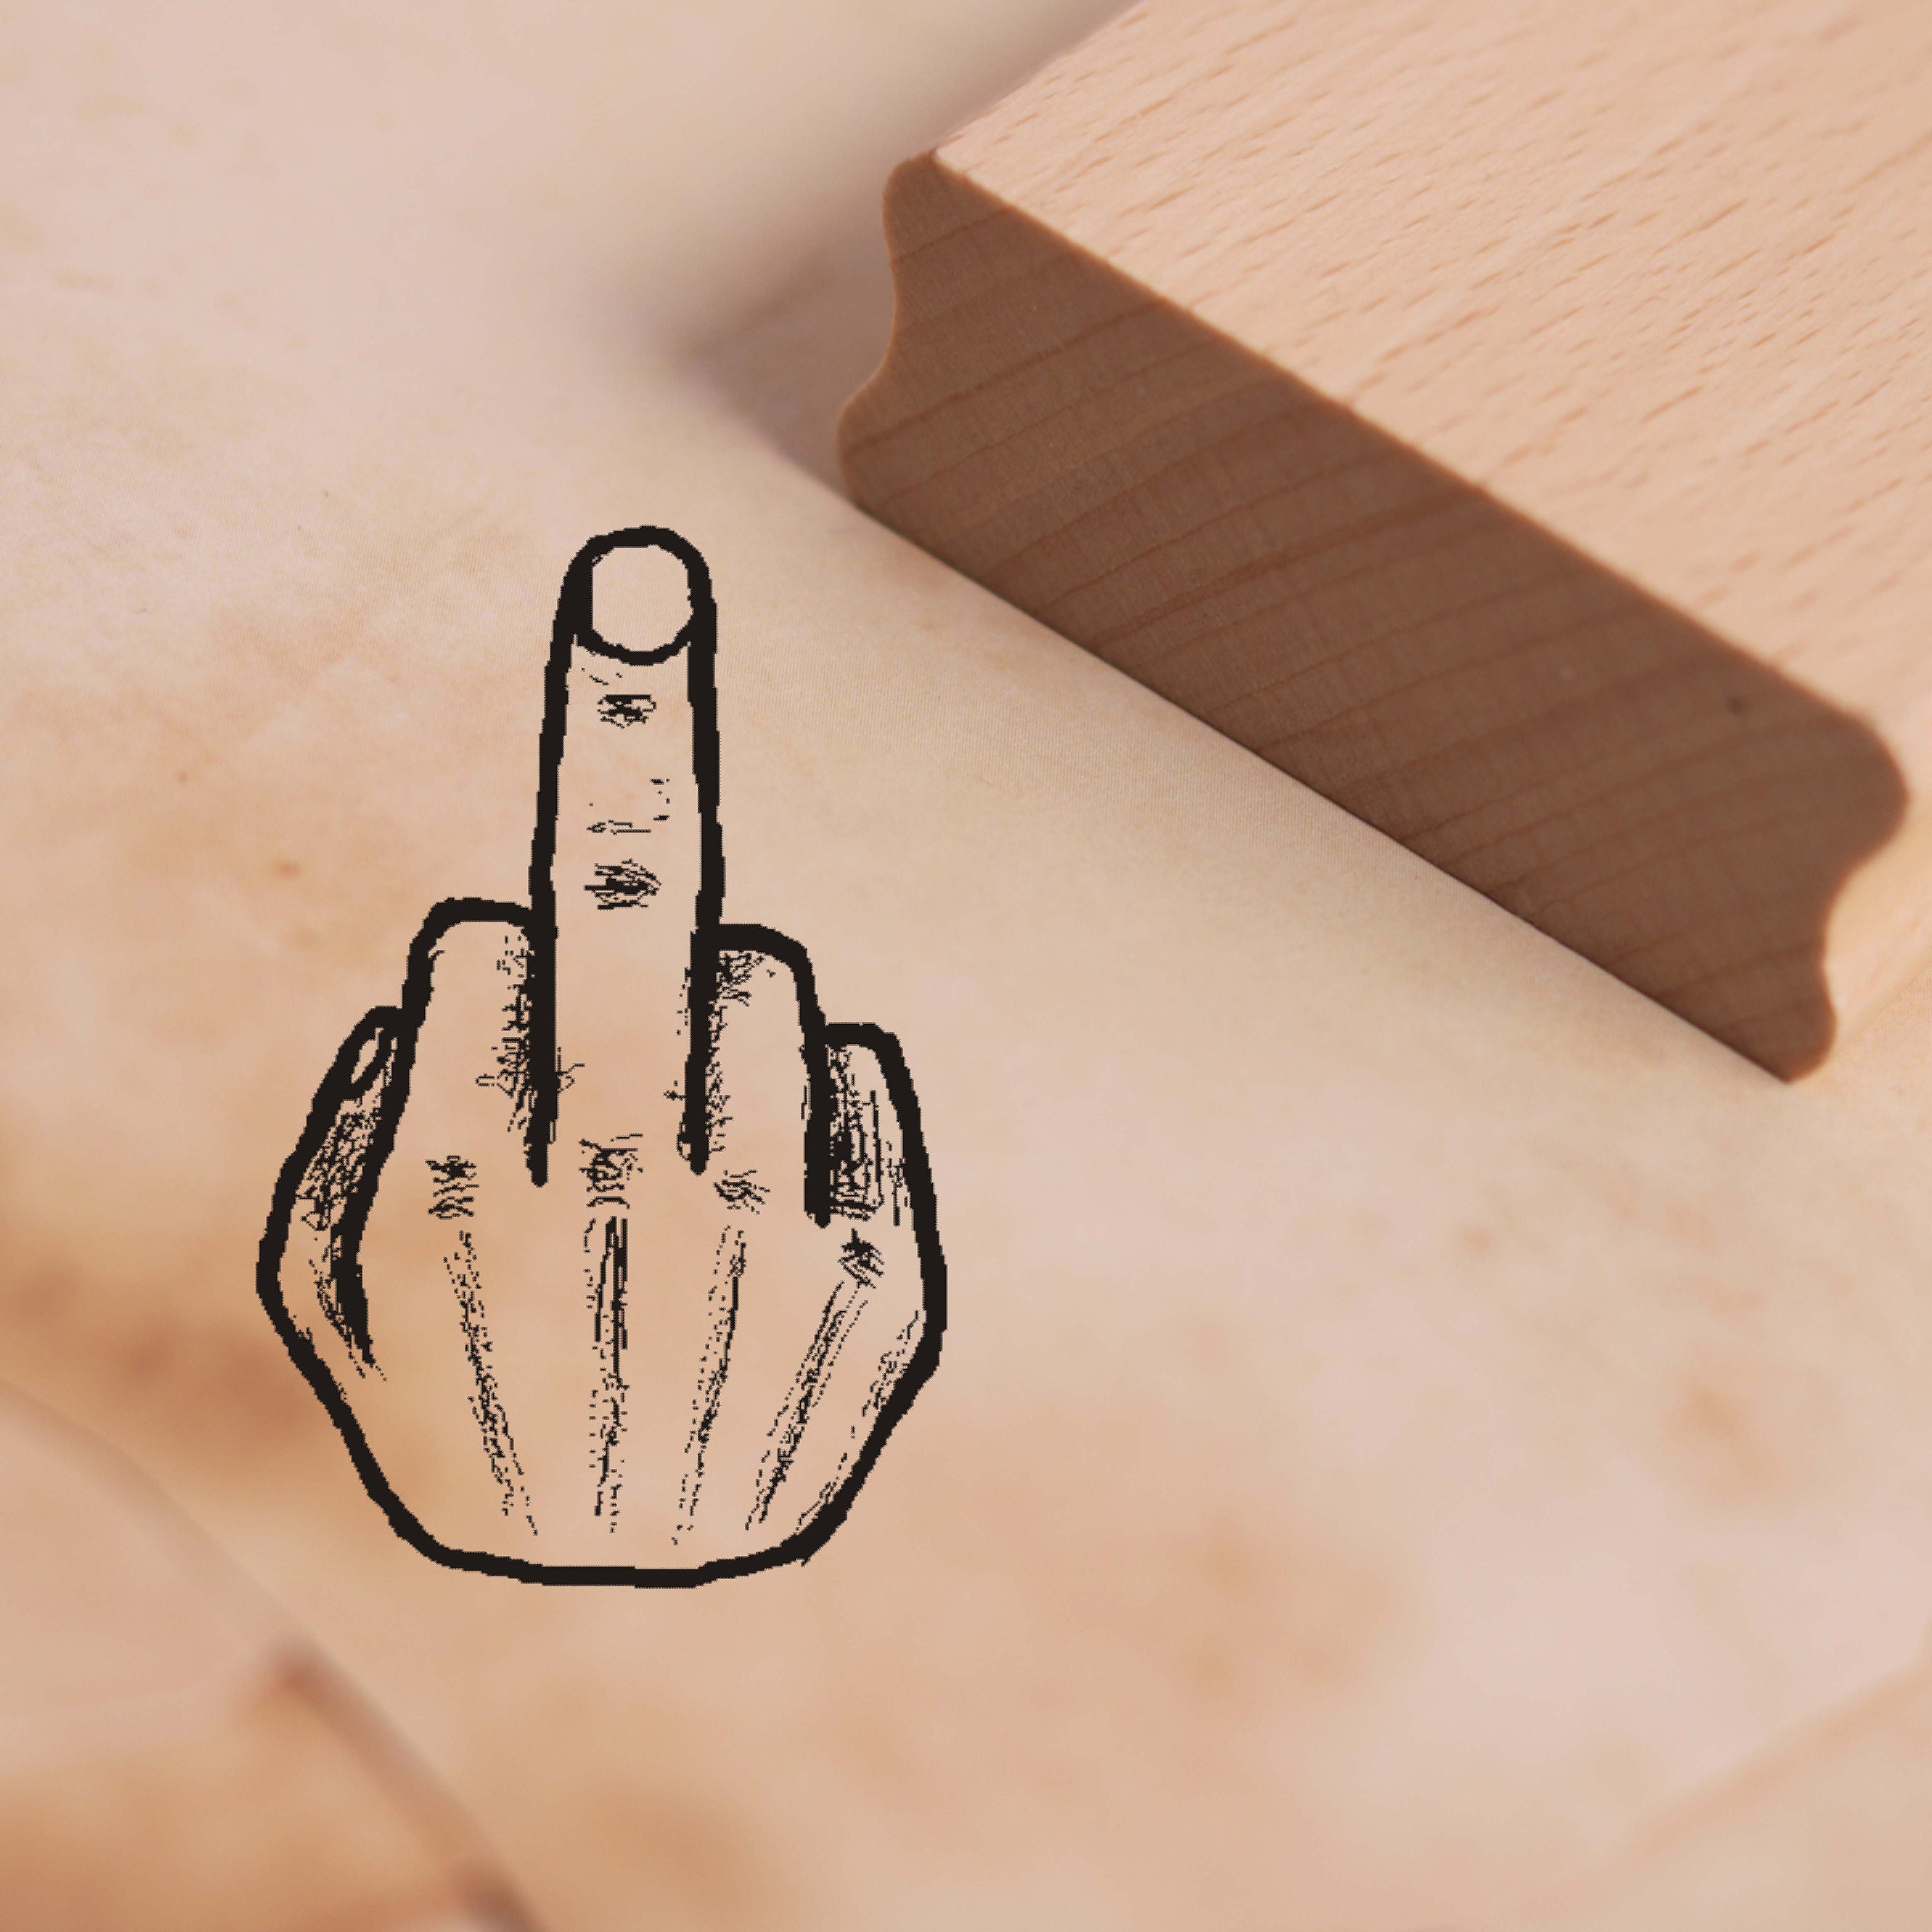 Middle finger sticker - .de